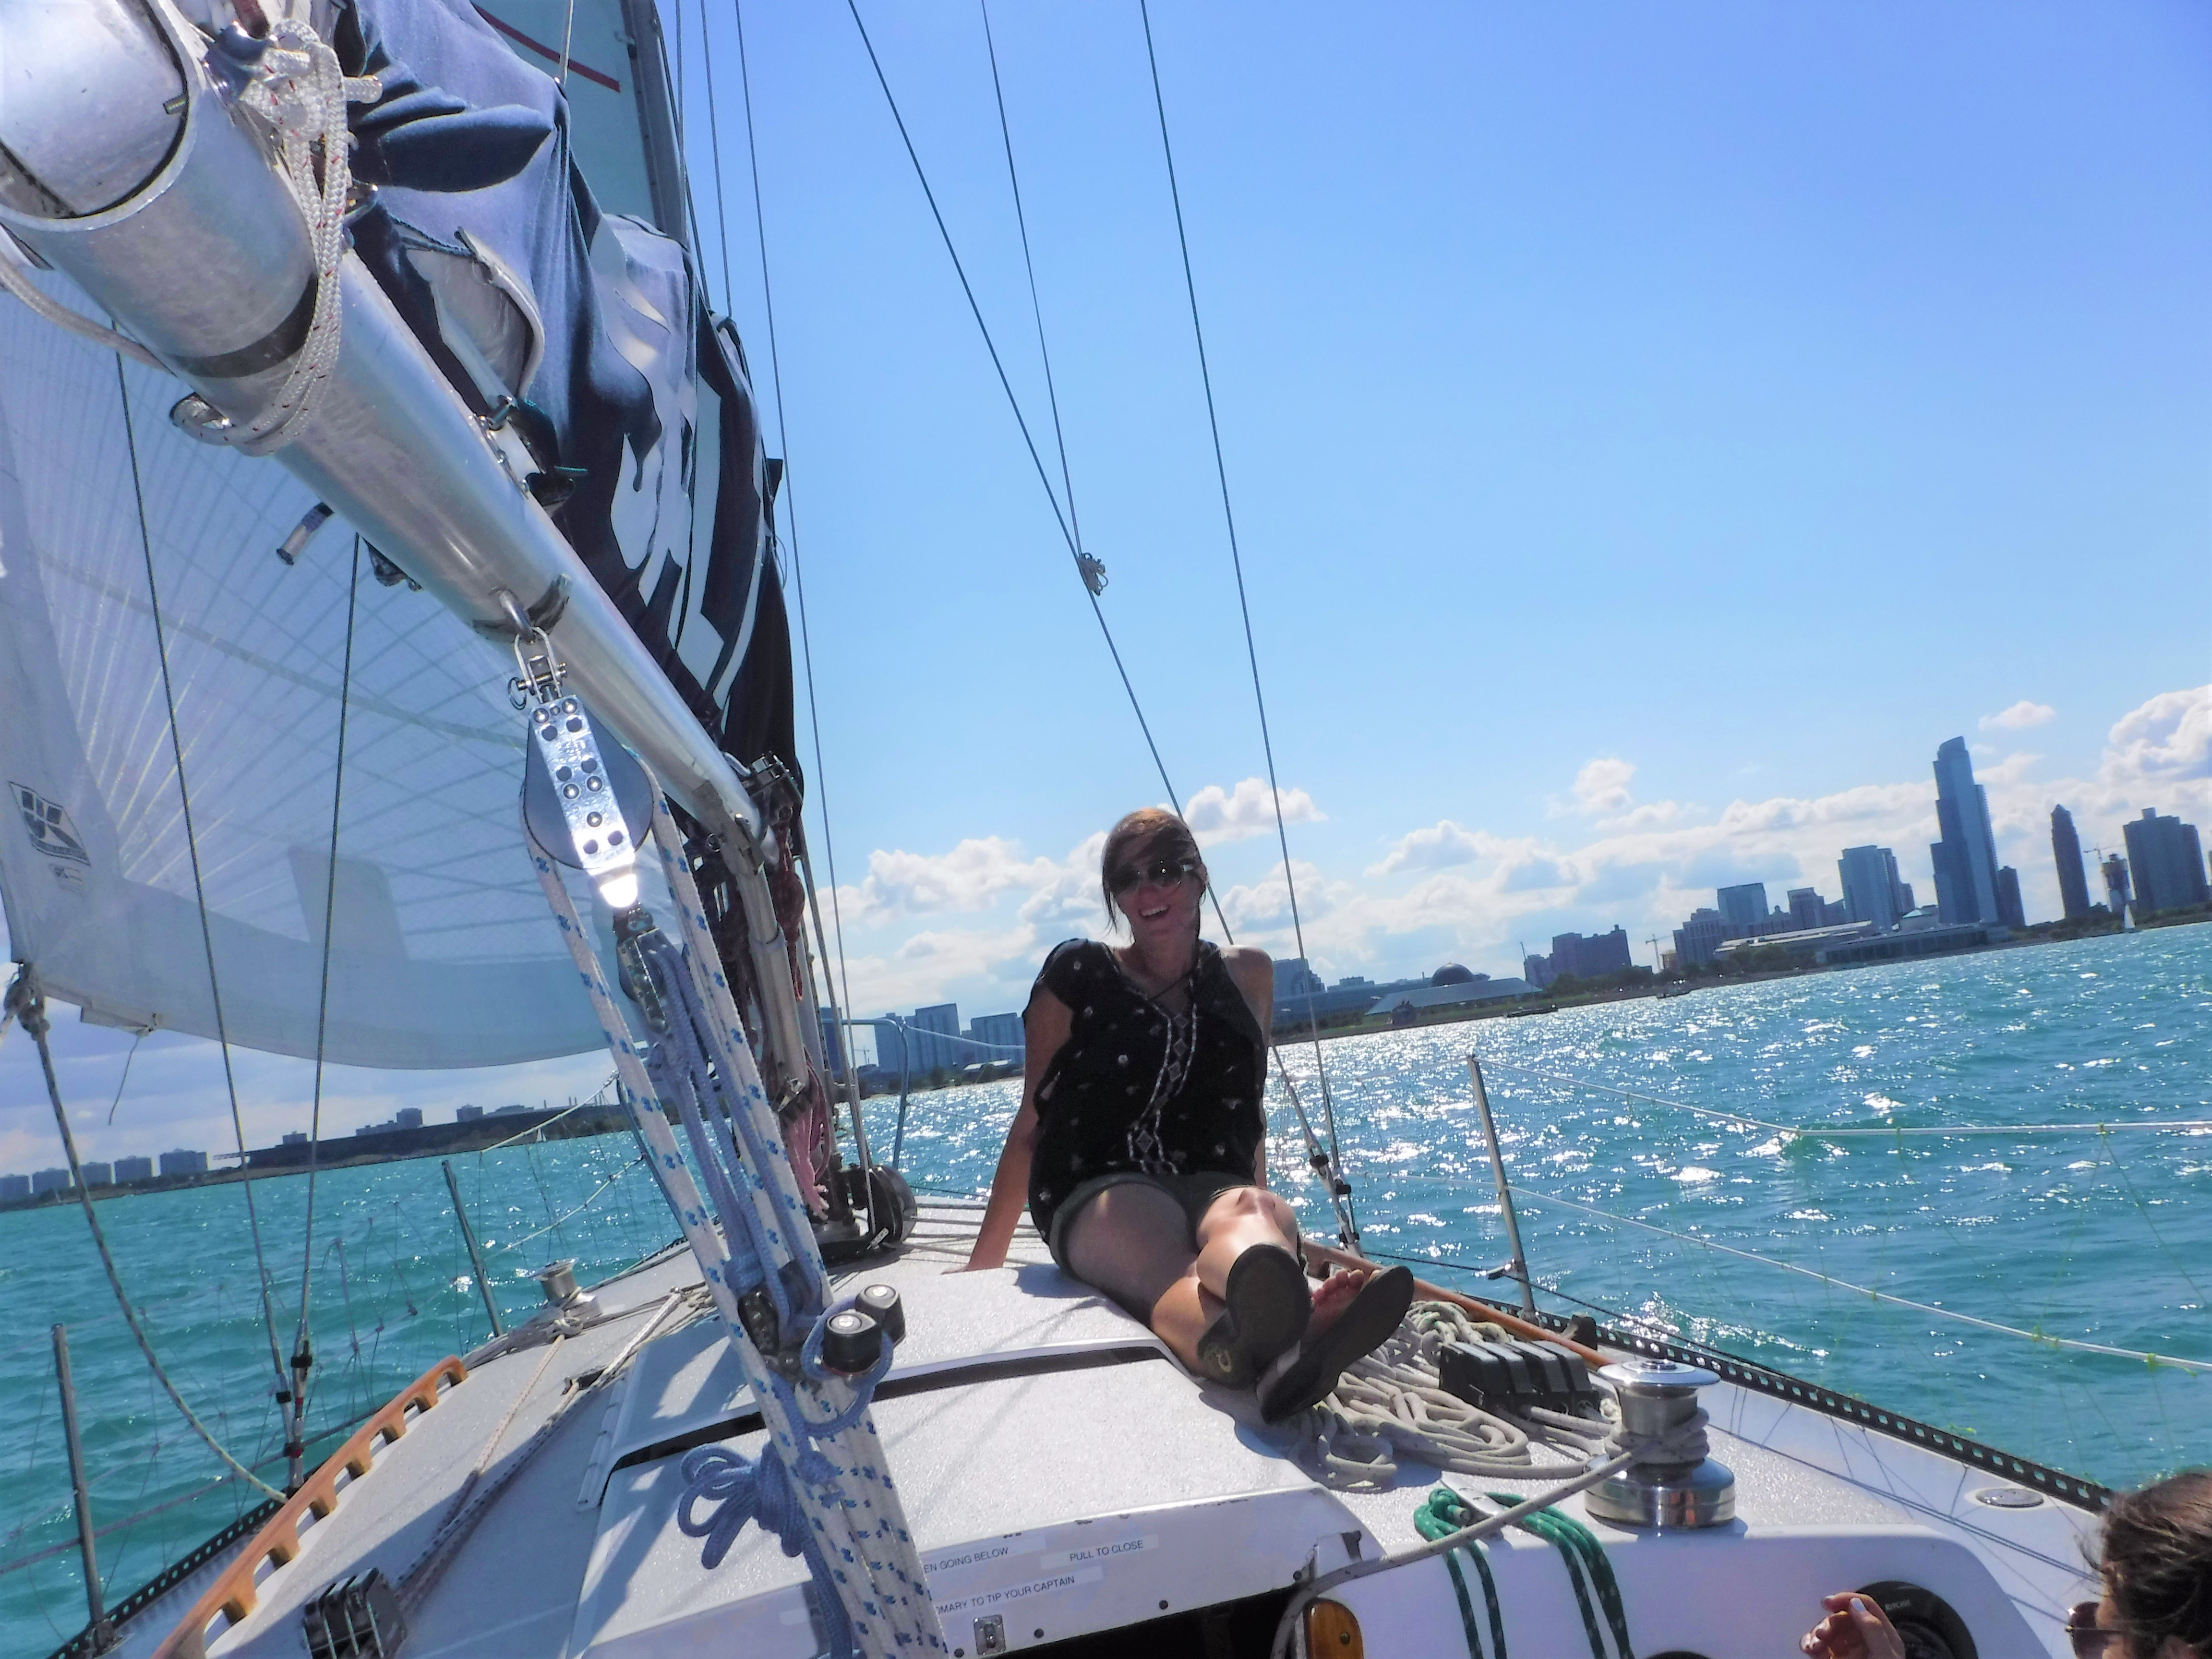 sailboat rental chicago